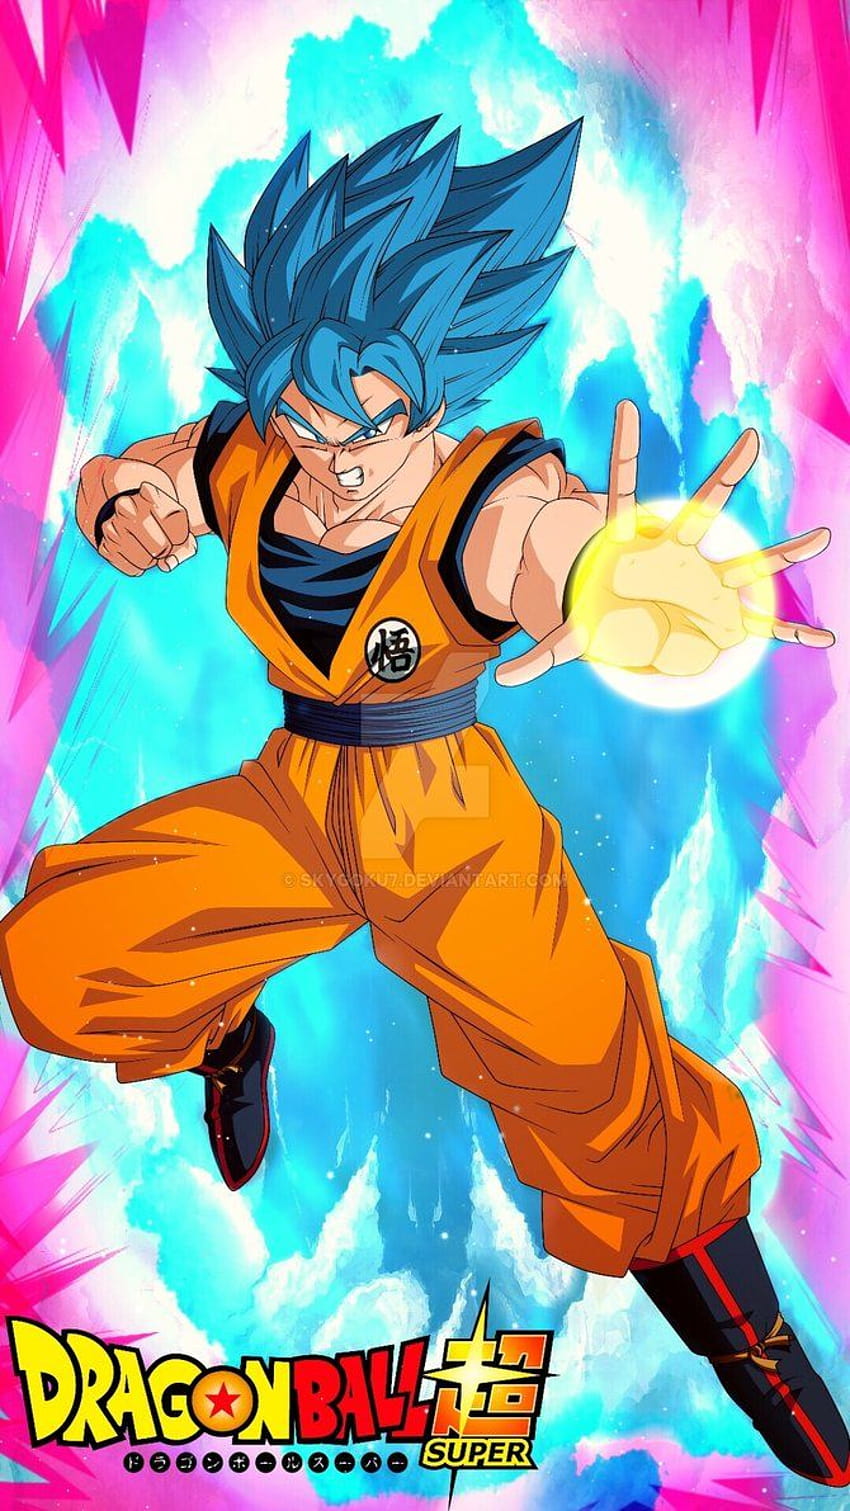 Super Saiyan God 2 Goku with Blue Hair by SonBui on DeviantArt